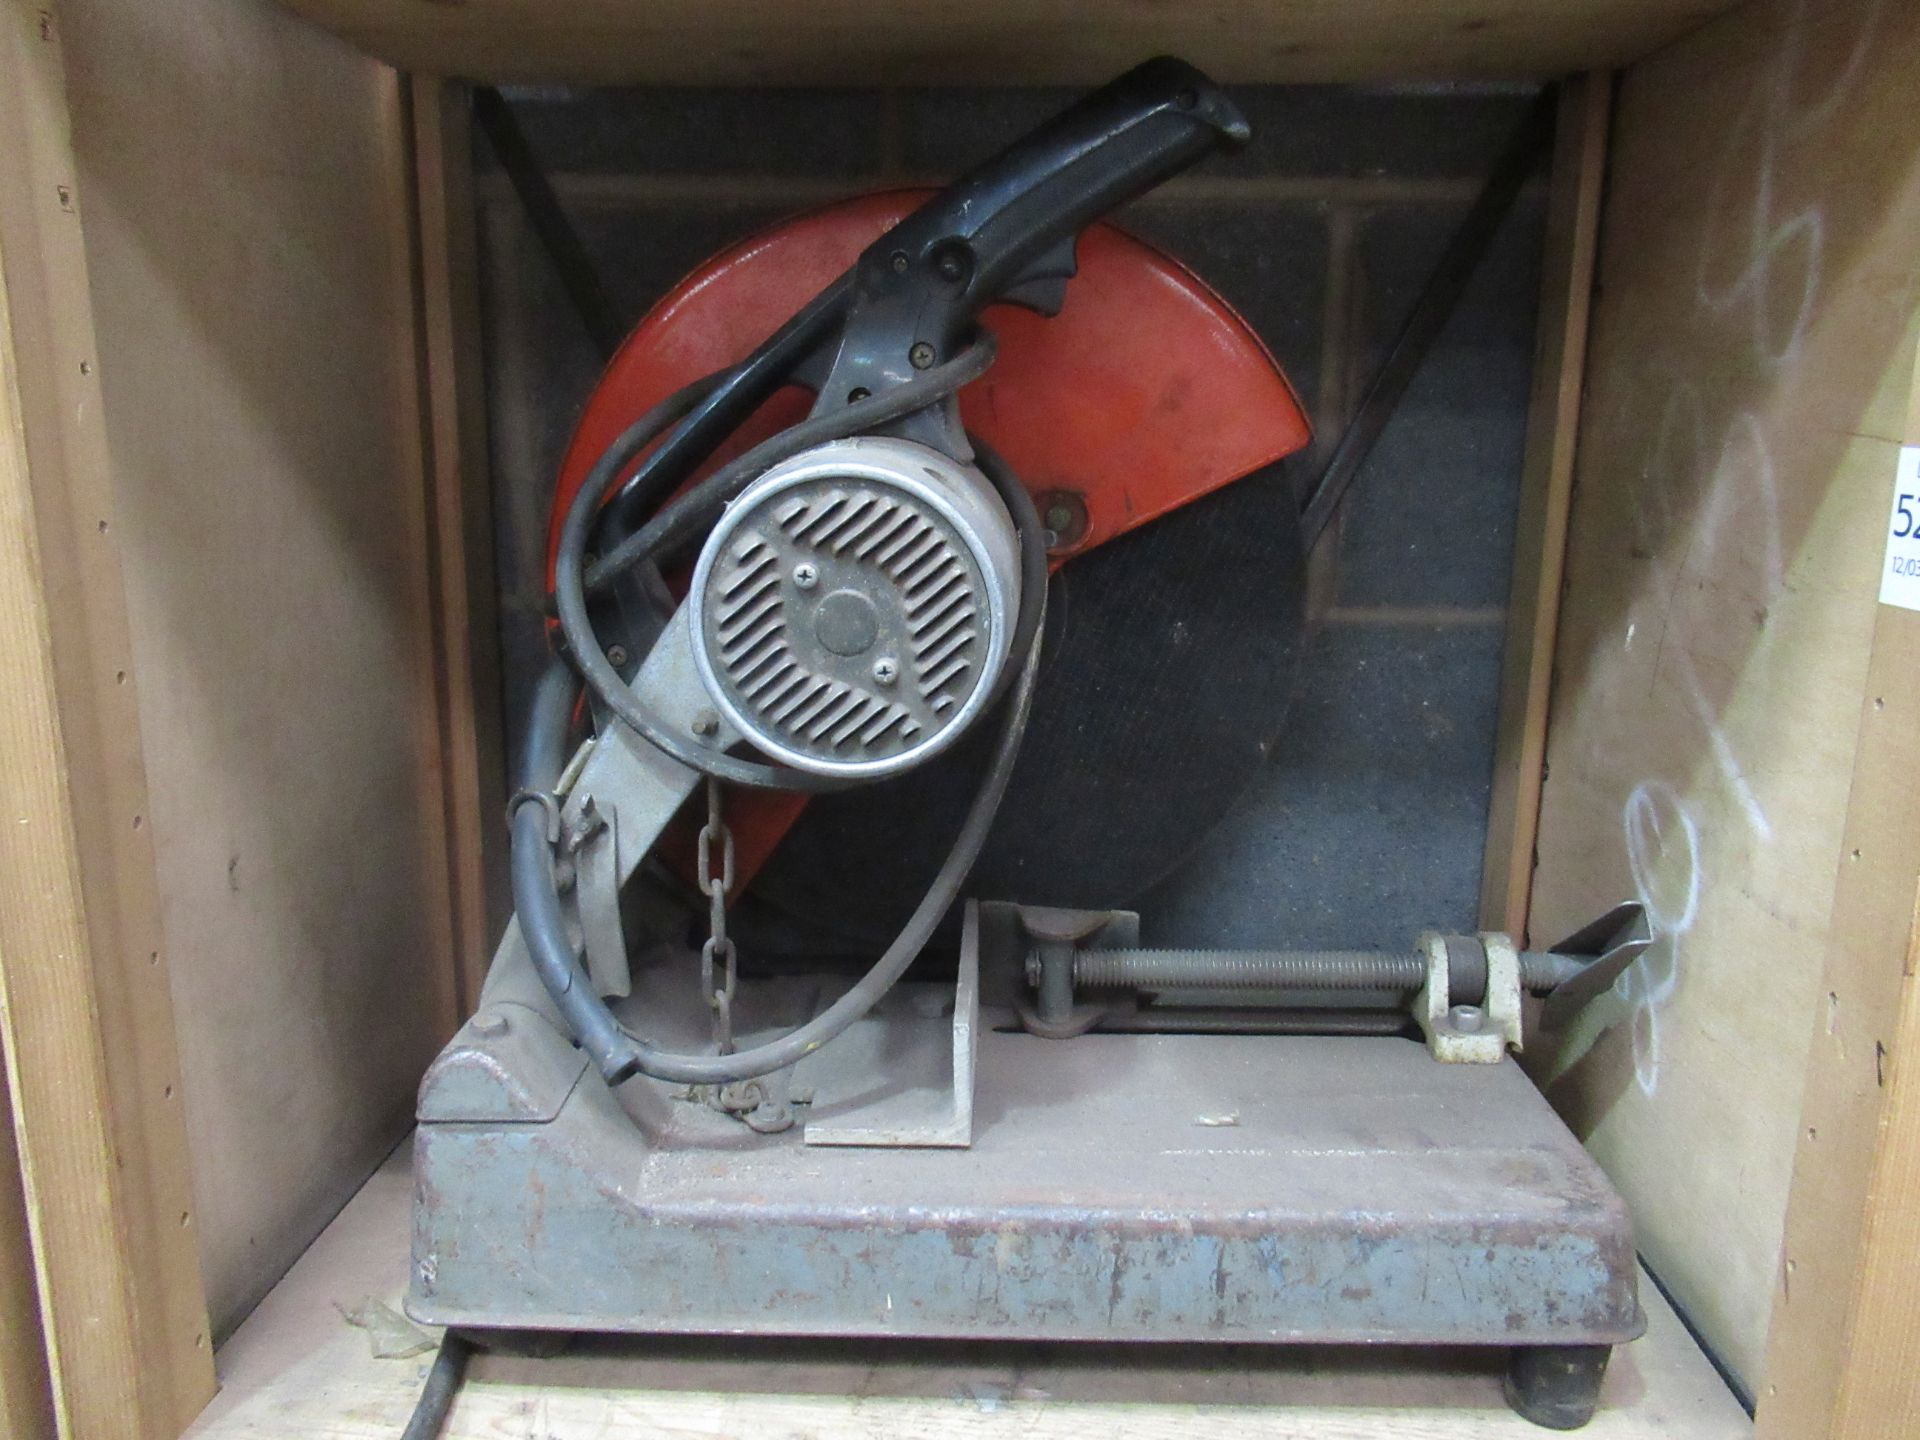 A Makita 355mm Cut Off Saw - missing plug (240V)